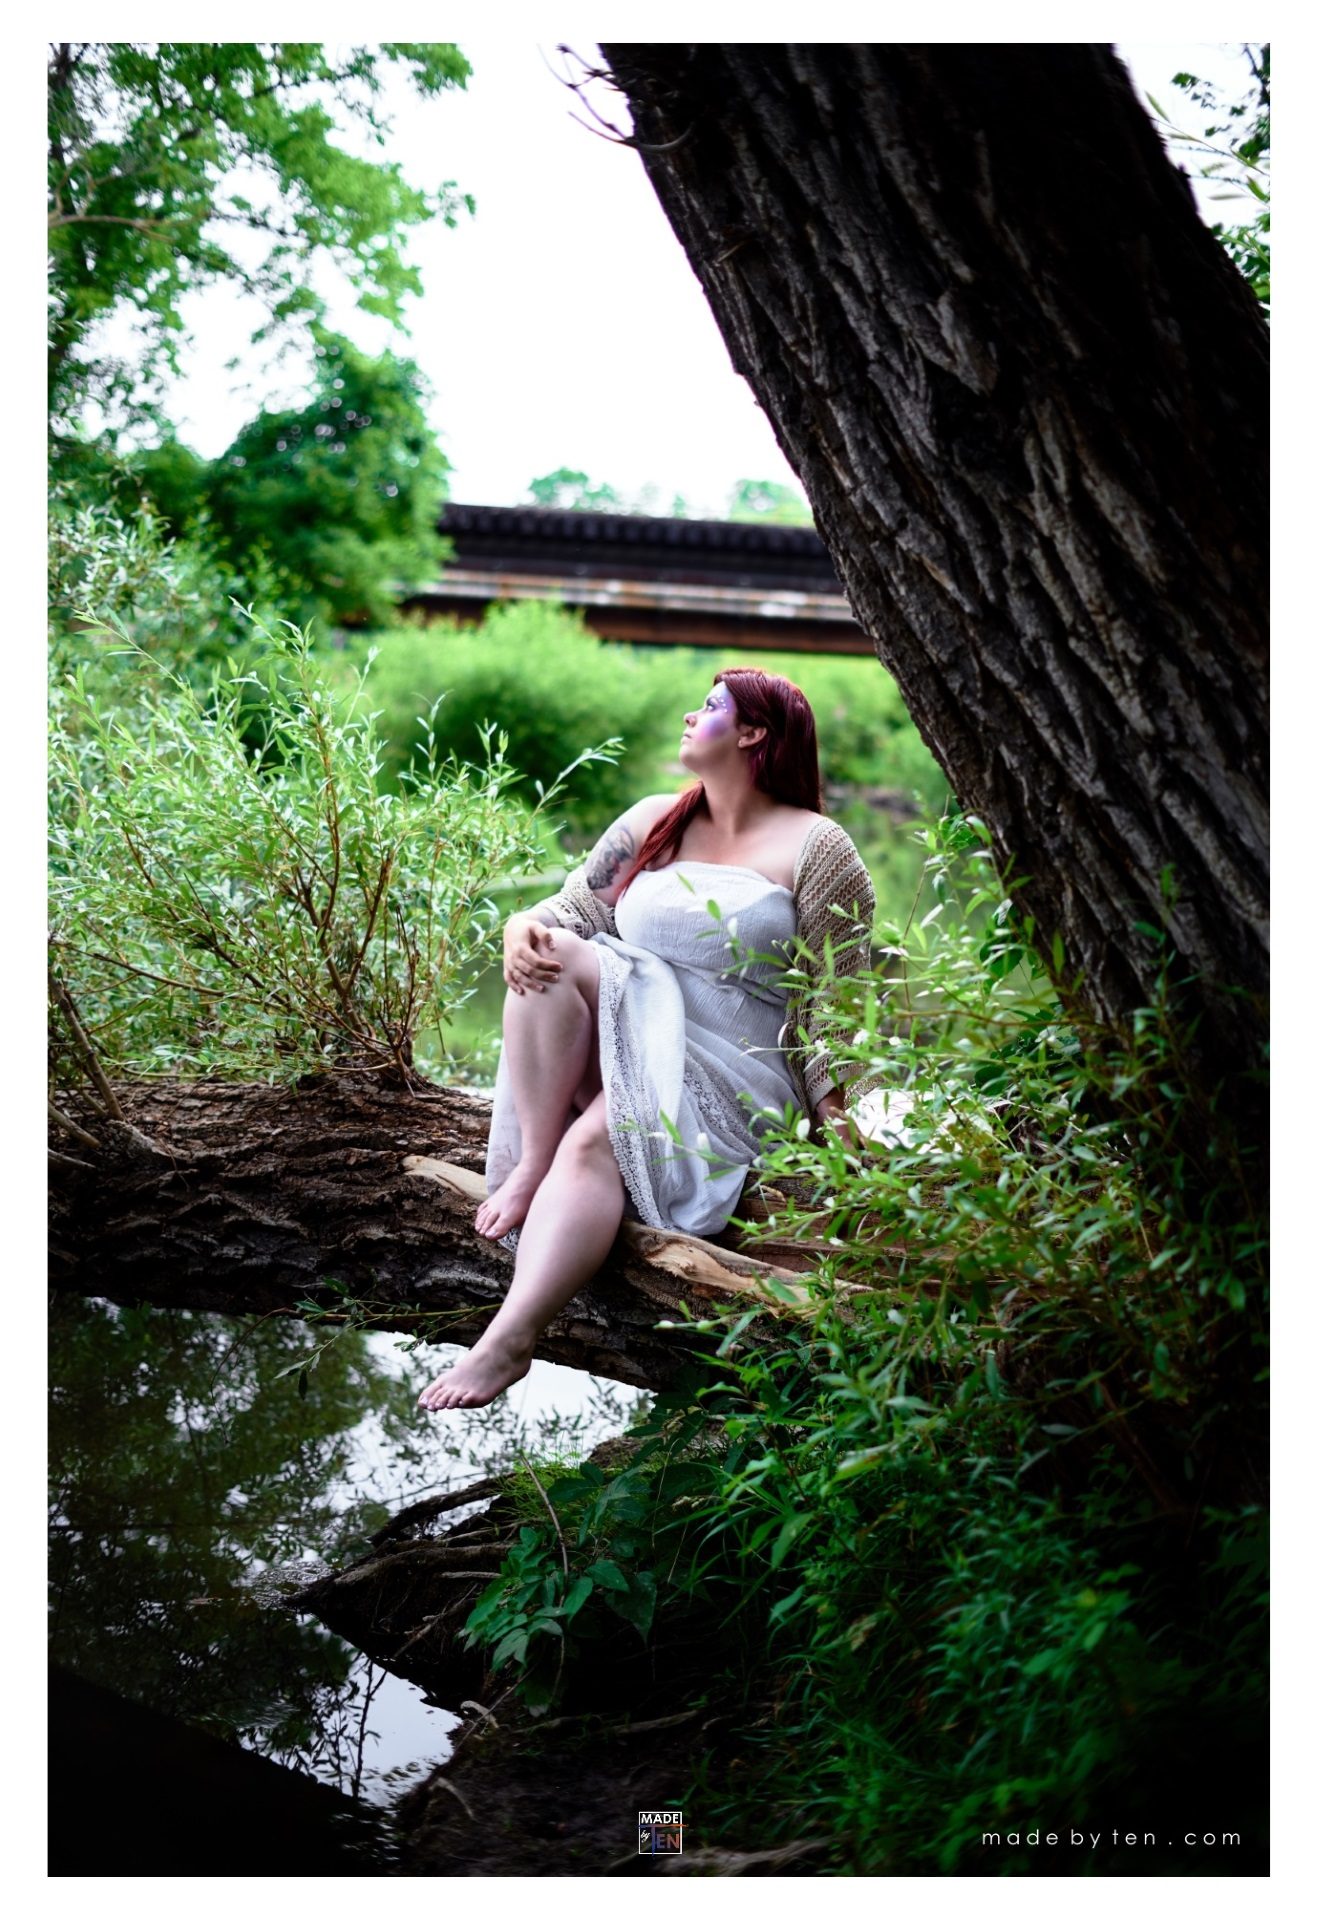 Woman Sitting in Tree - GTA Women Fantasy Photography